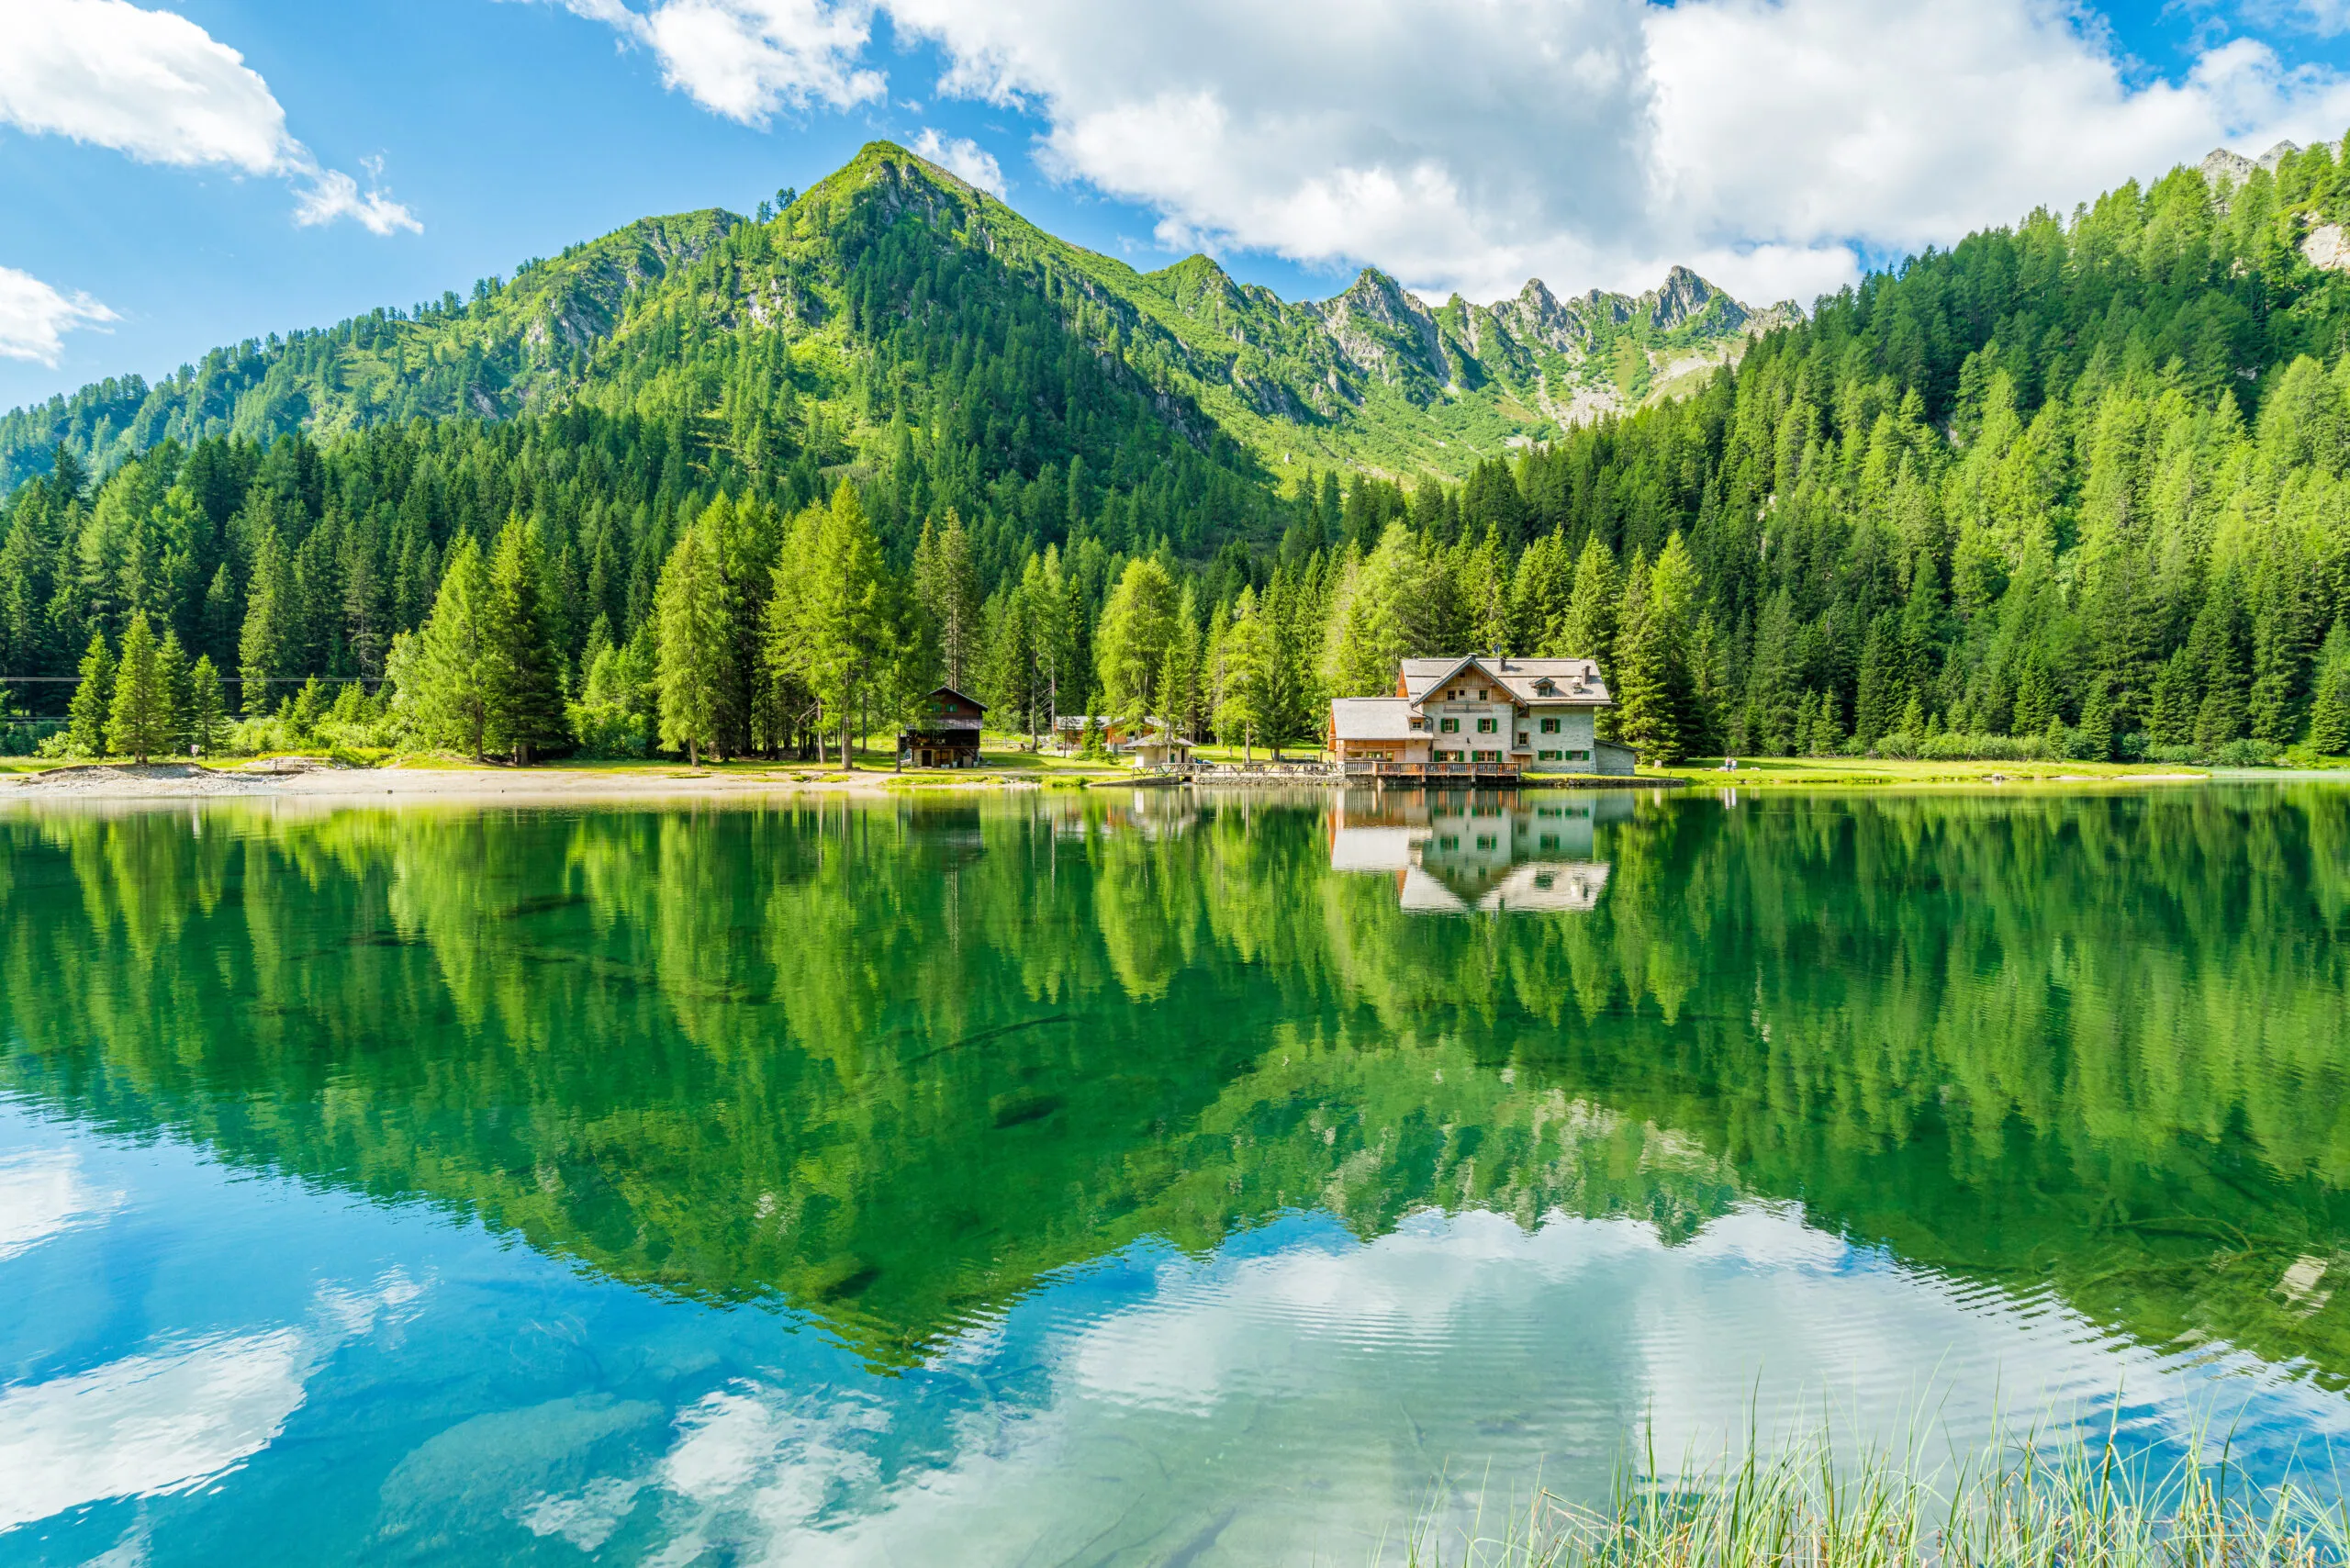 Idylliskt landskap vid sjön Nambino, nära Madonna di Campiglio. Provinsen Trento, Trentino Alto Adige, norra Italien.